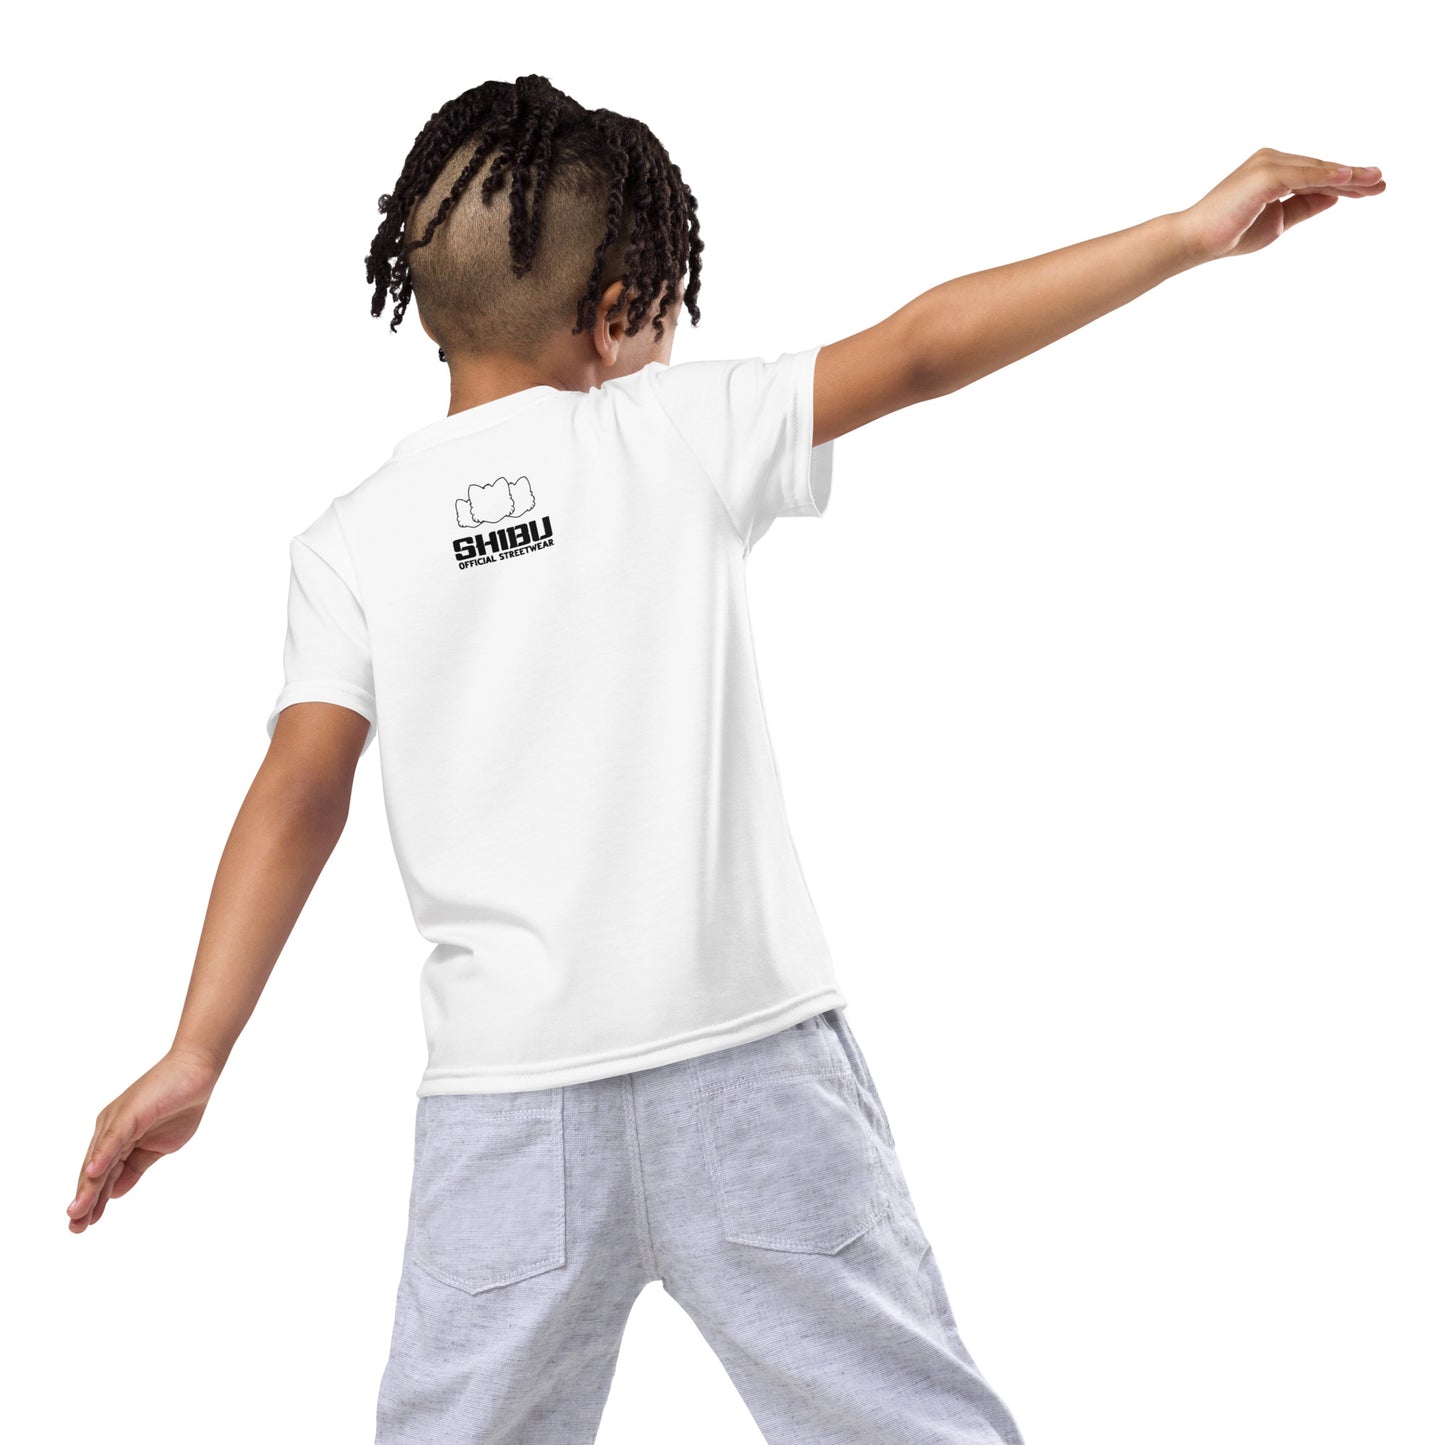 SHIBU Kids crew neck t-shirt